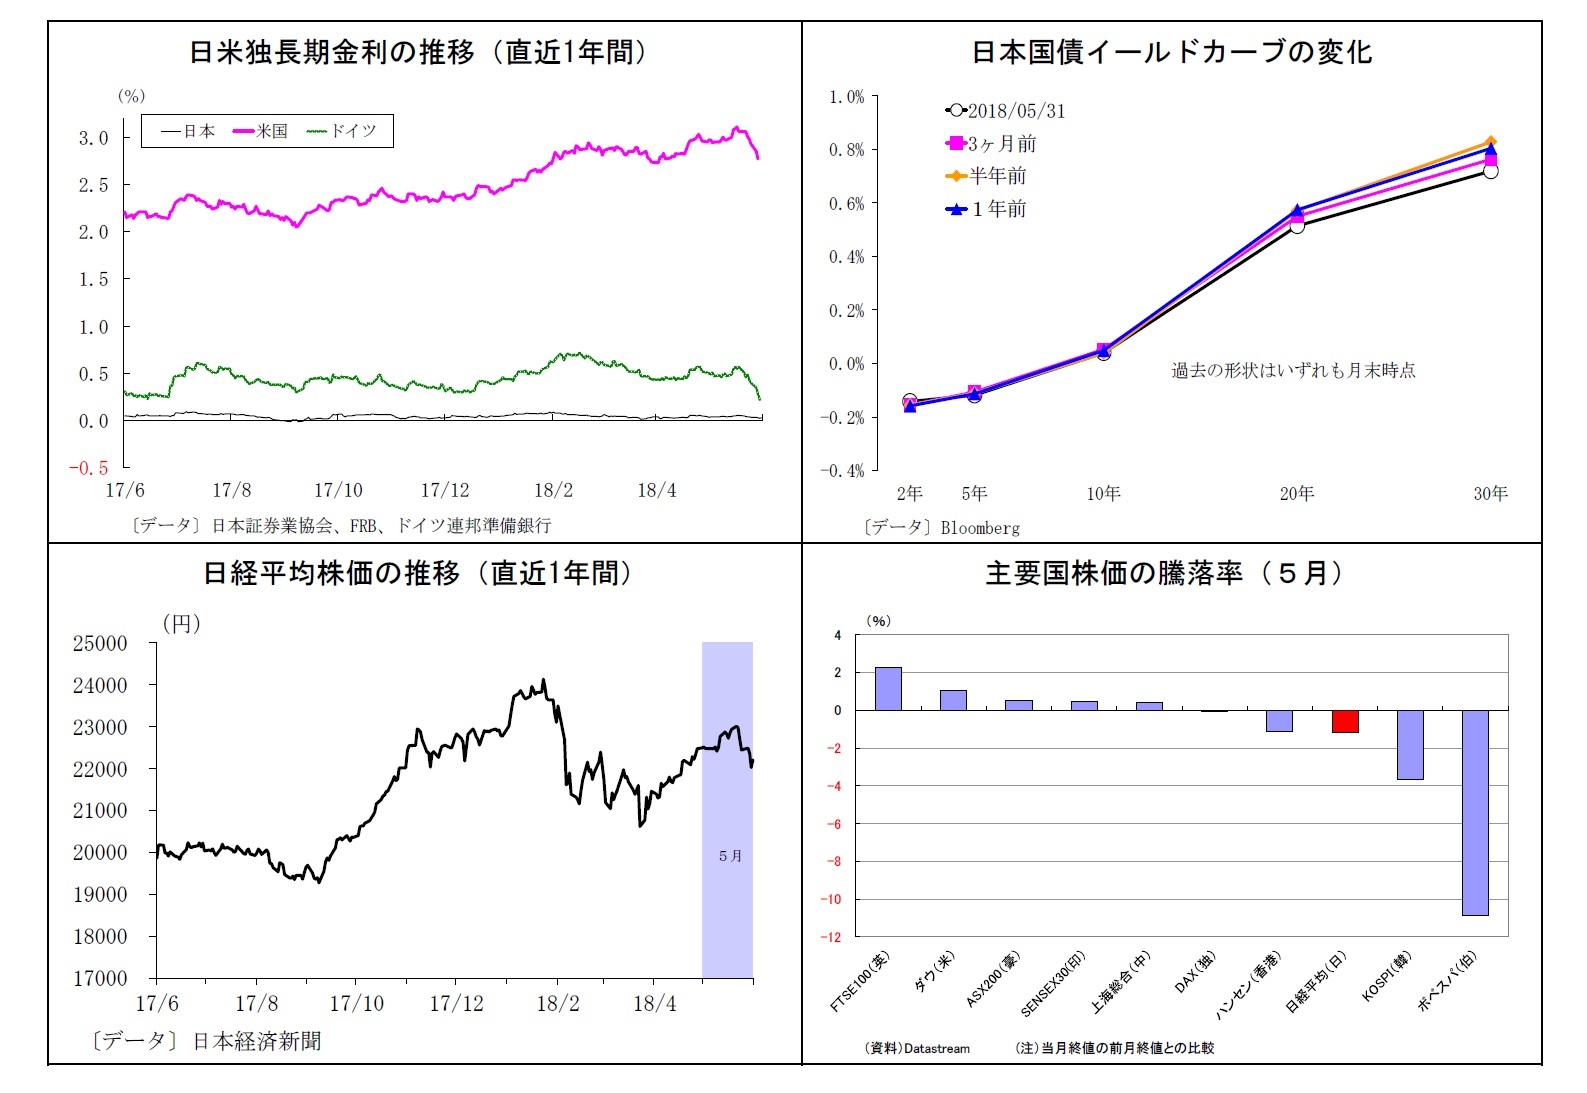 日米独長期金利の推移（直近1年間）/日本国債イールドカーブの変化/日経平均株価の推移（直近1年間）/主要国株価の騰落率（５月）